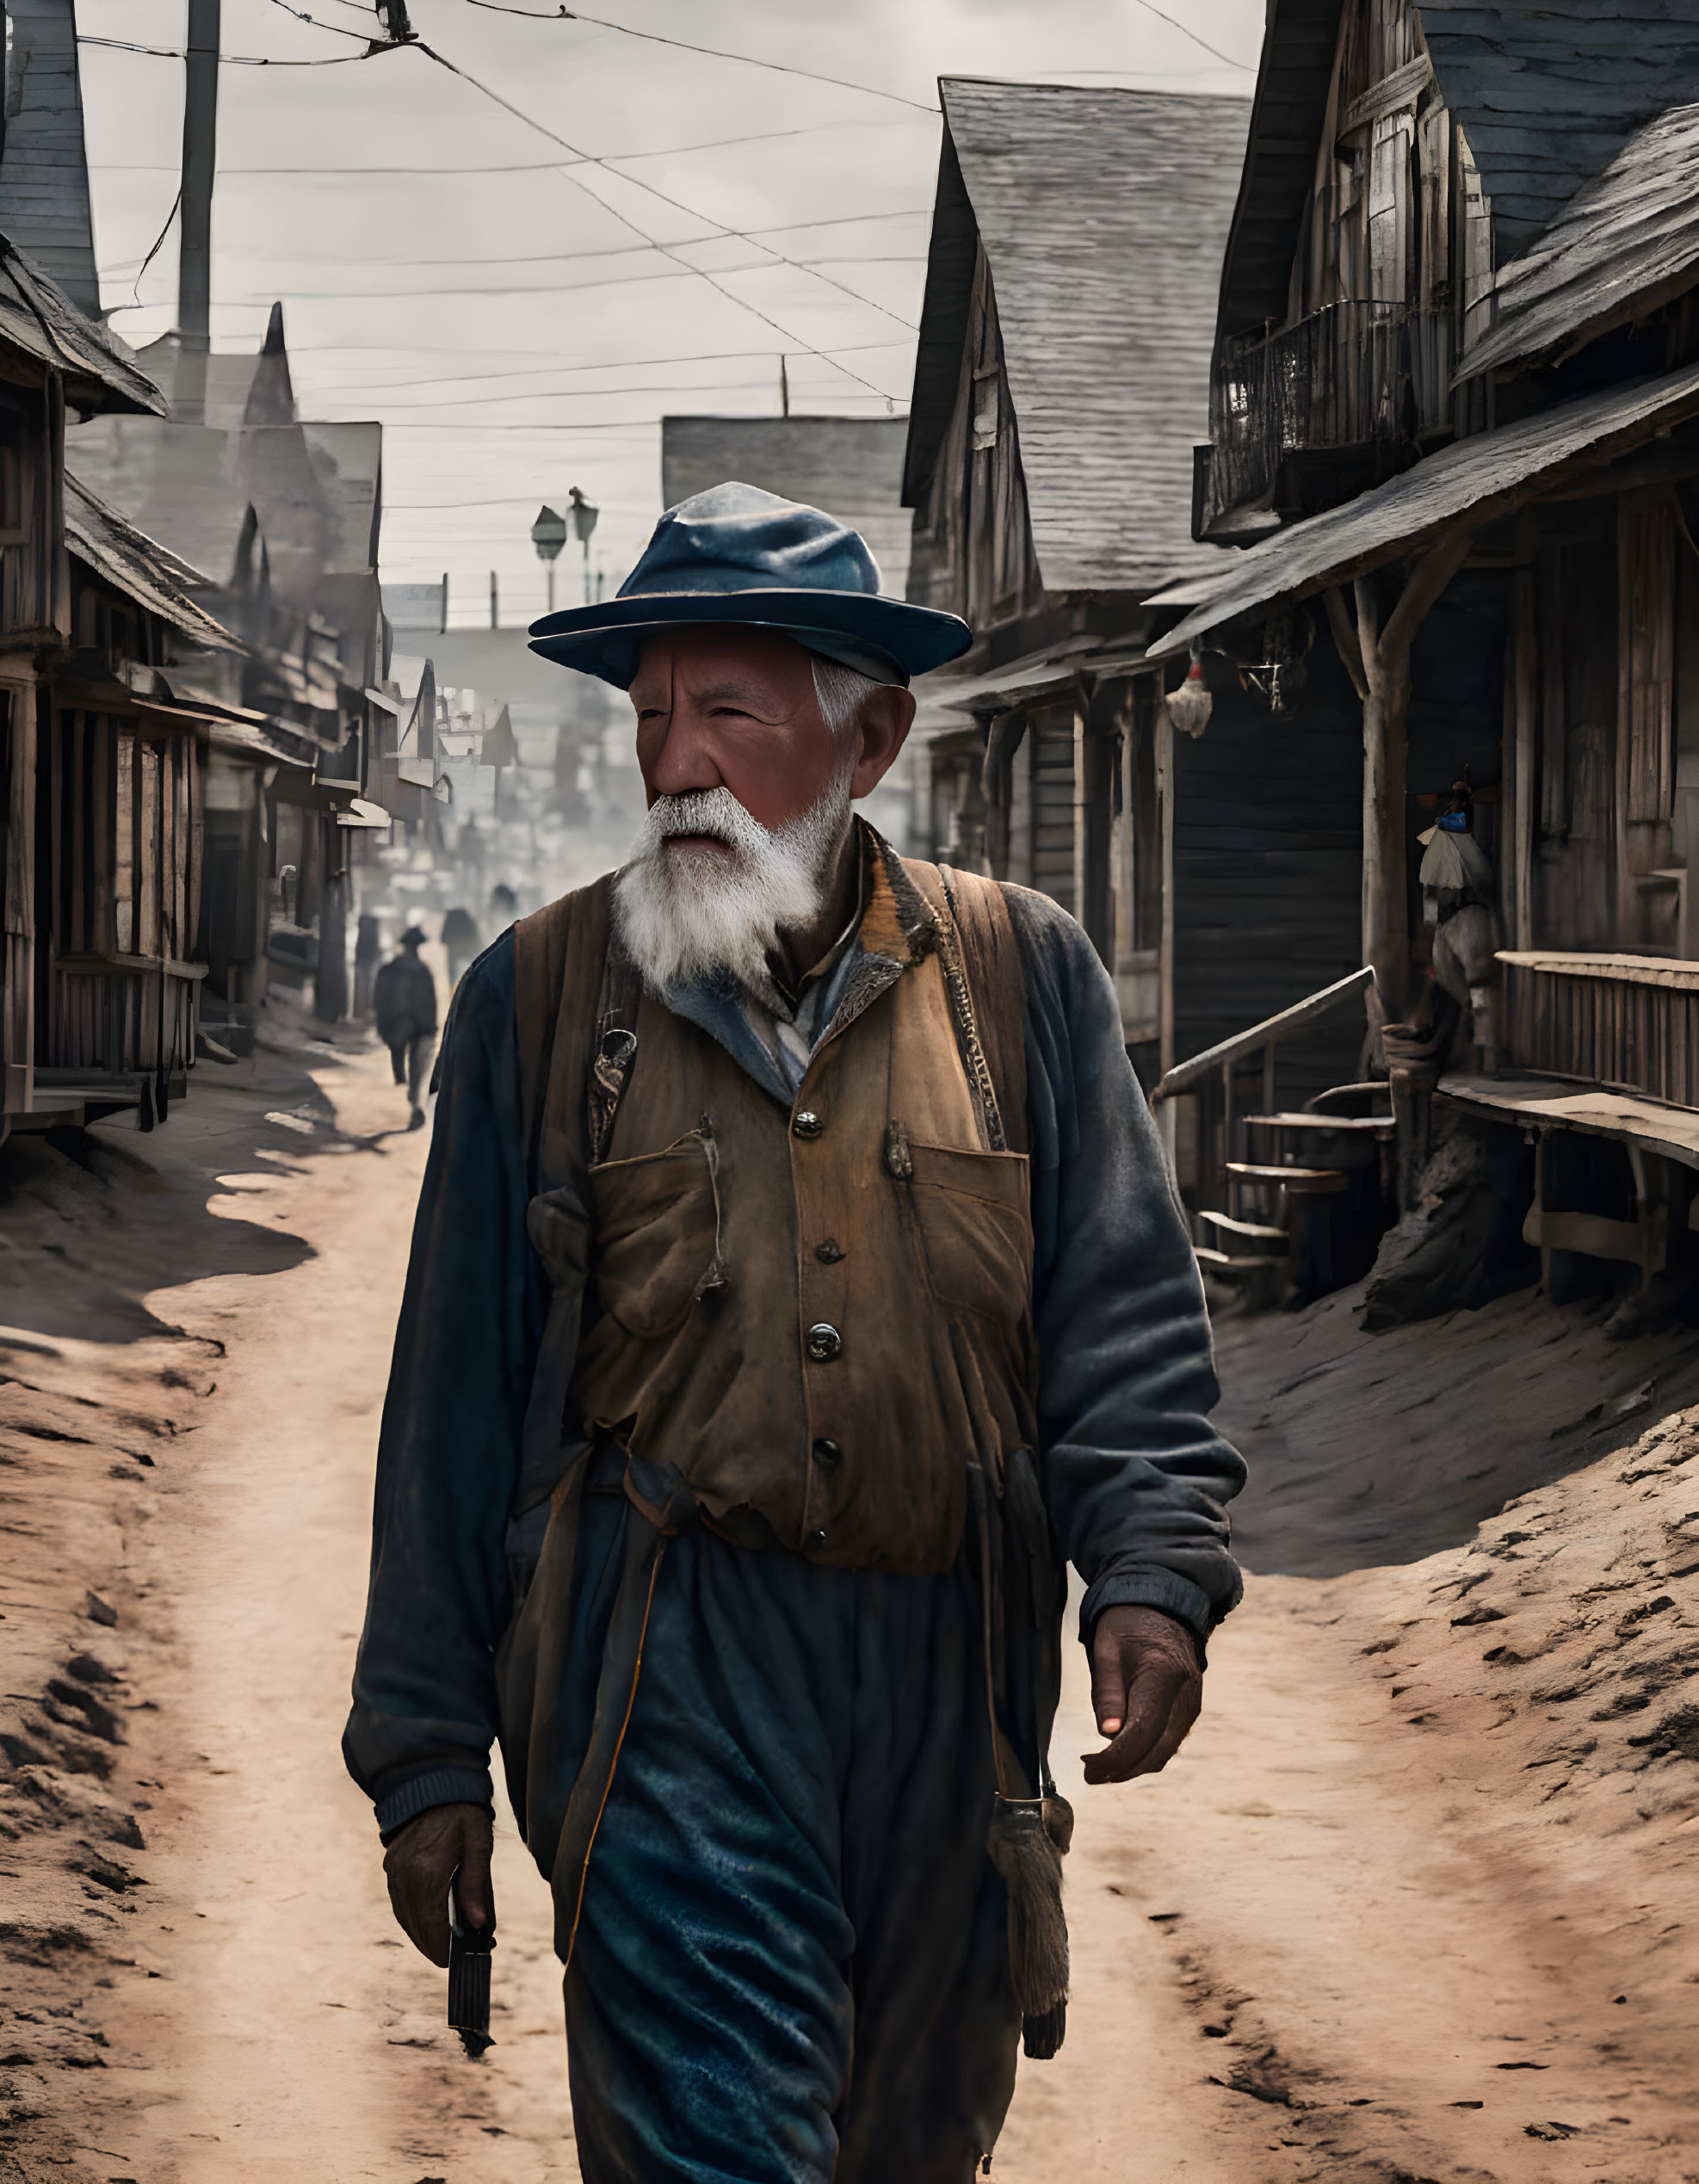 Elderly man with white beard in blue attire walking on old-time street